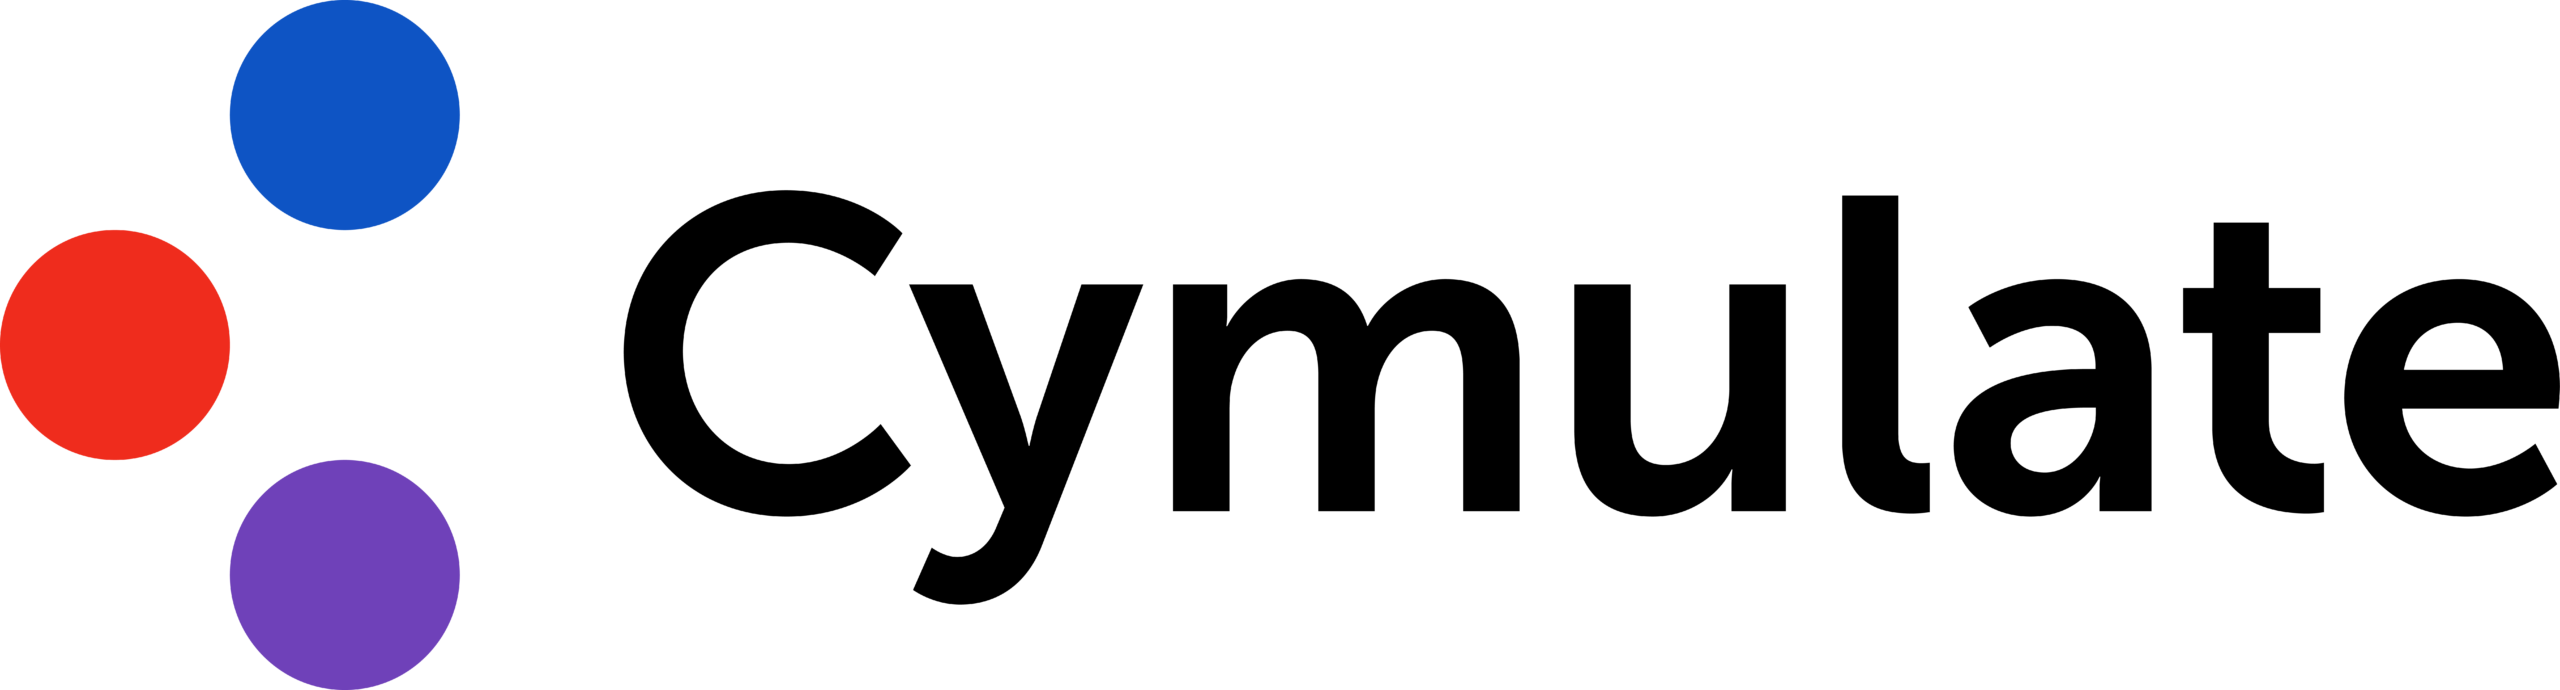 Cymulate-logo-black_horizontal